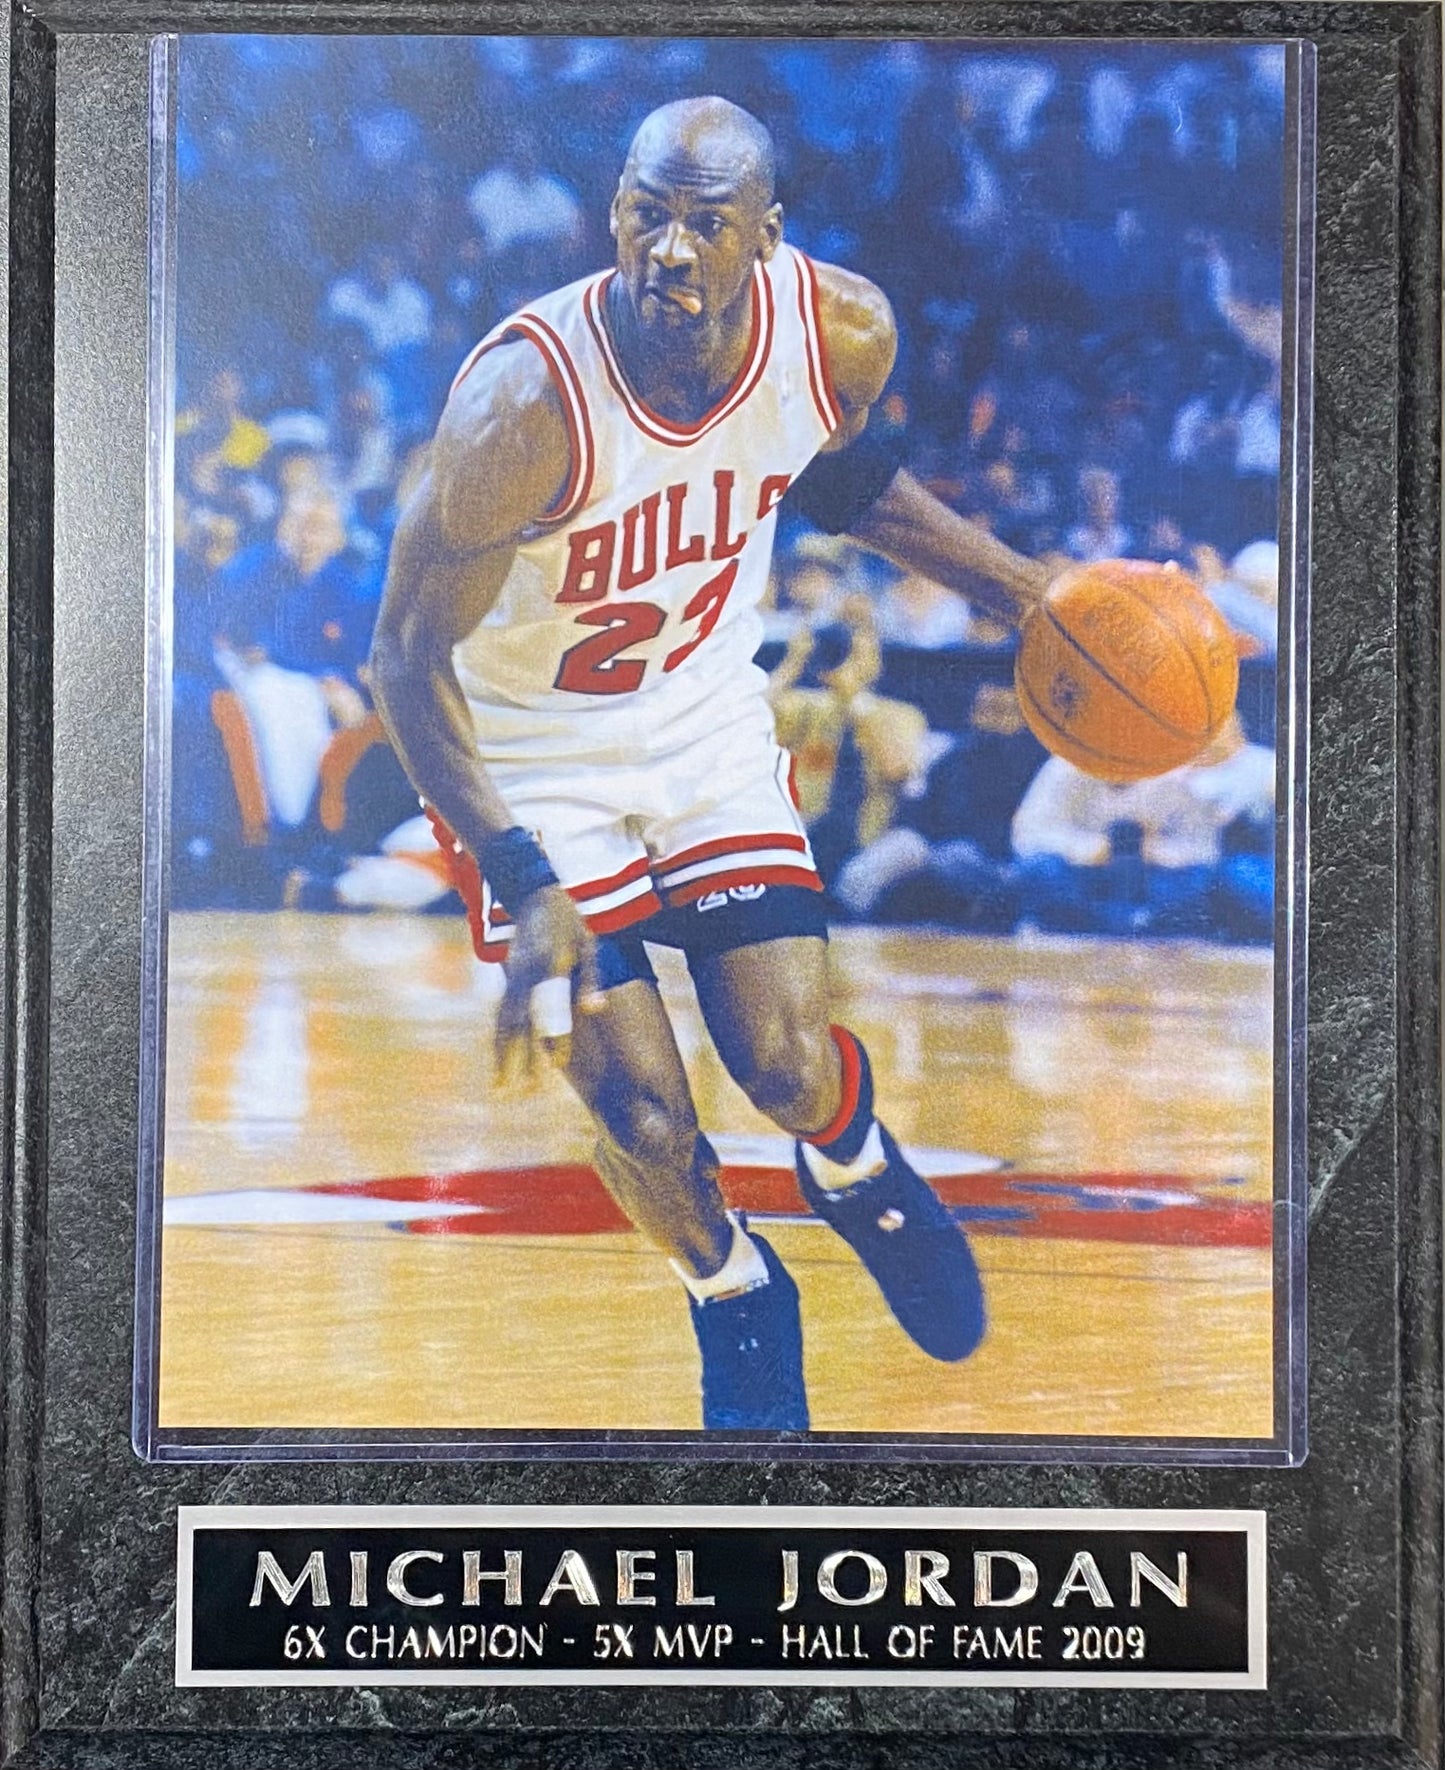 Michael Jordan Chicago Bulls 6X Champion- 5X MVP- Hall of Fame 2009 Wall Plaque